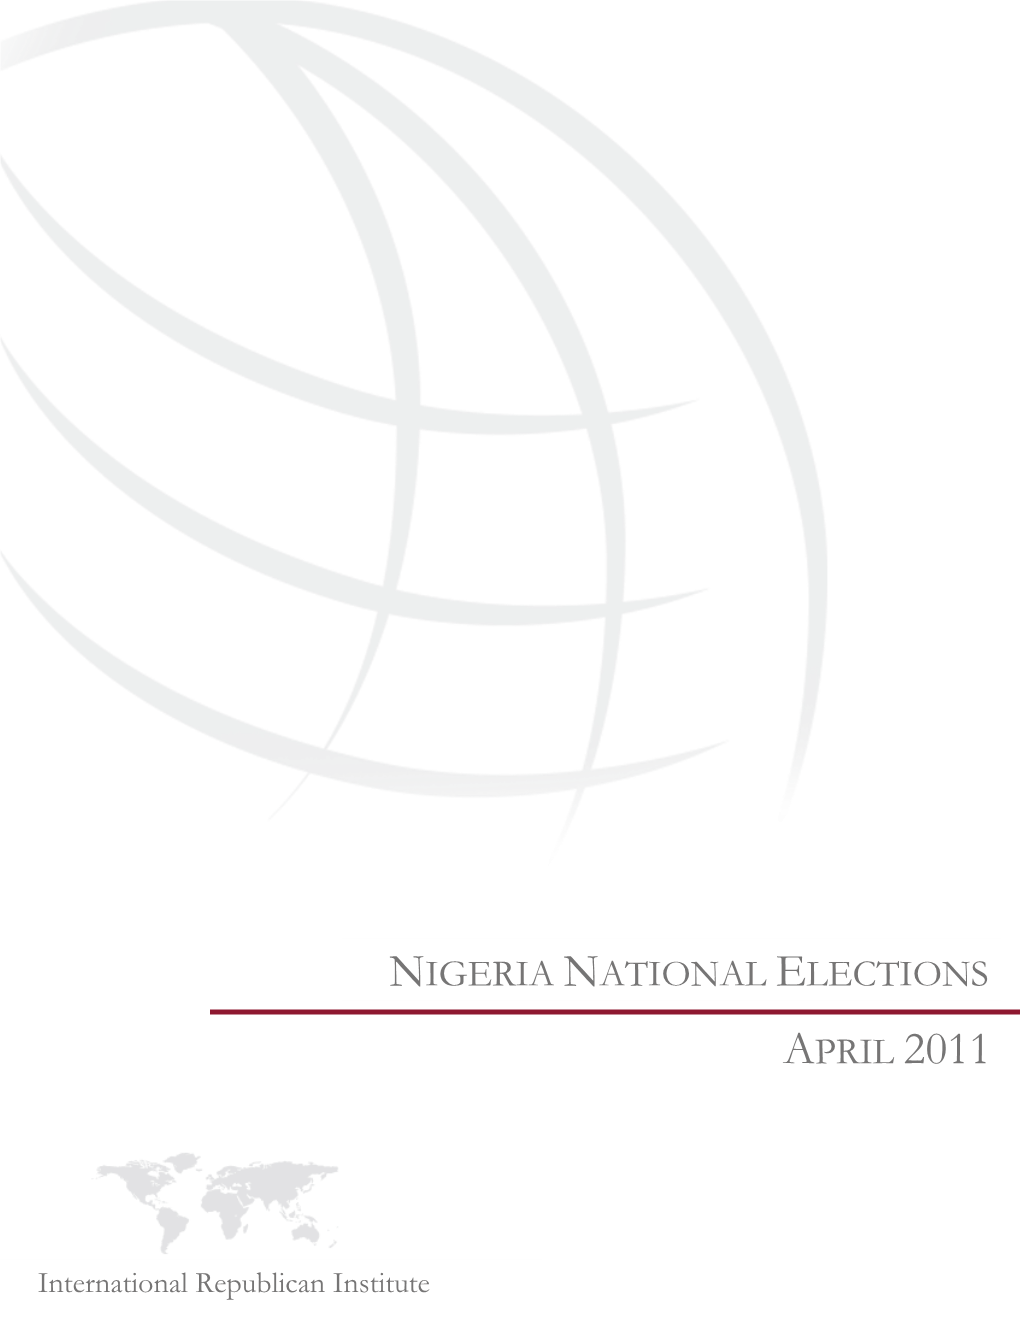 Nigeria National Elections April 2011